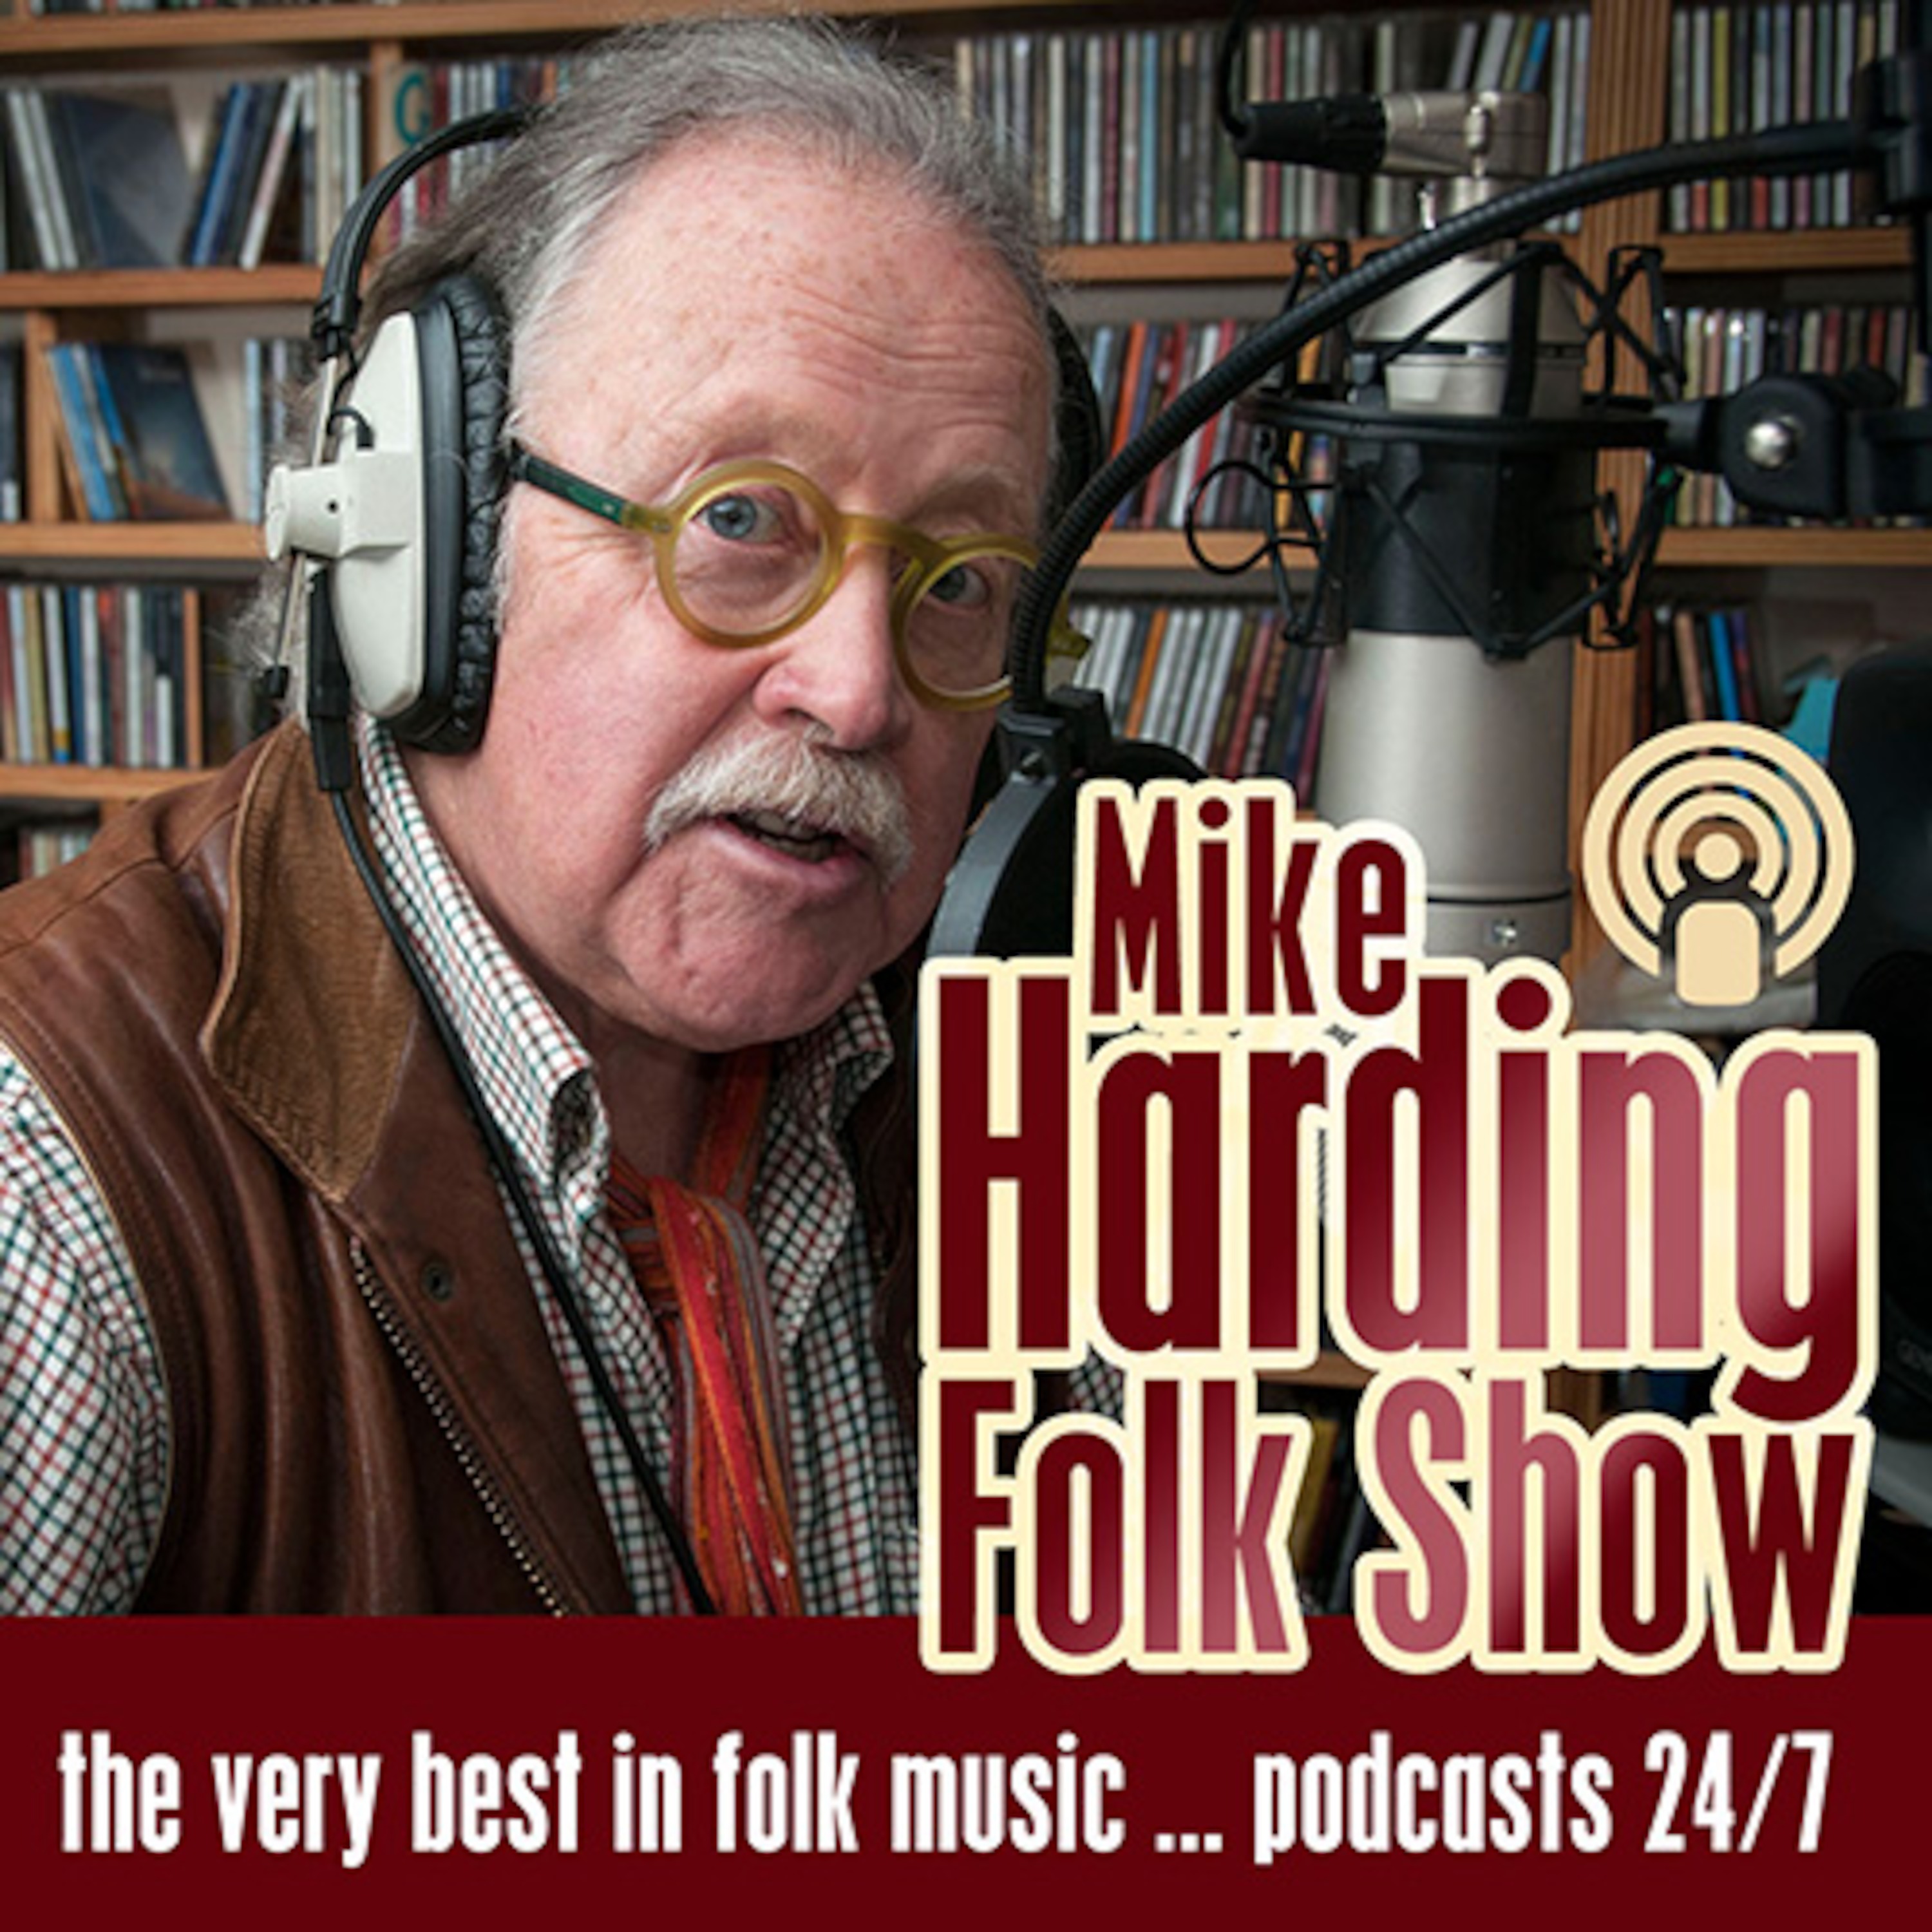 Mike Harding Folk Show 268